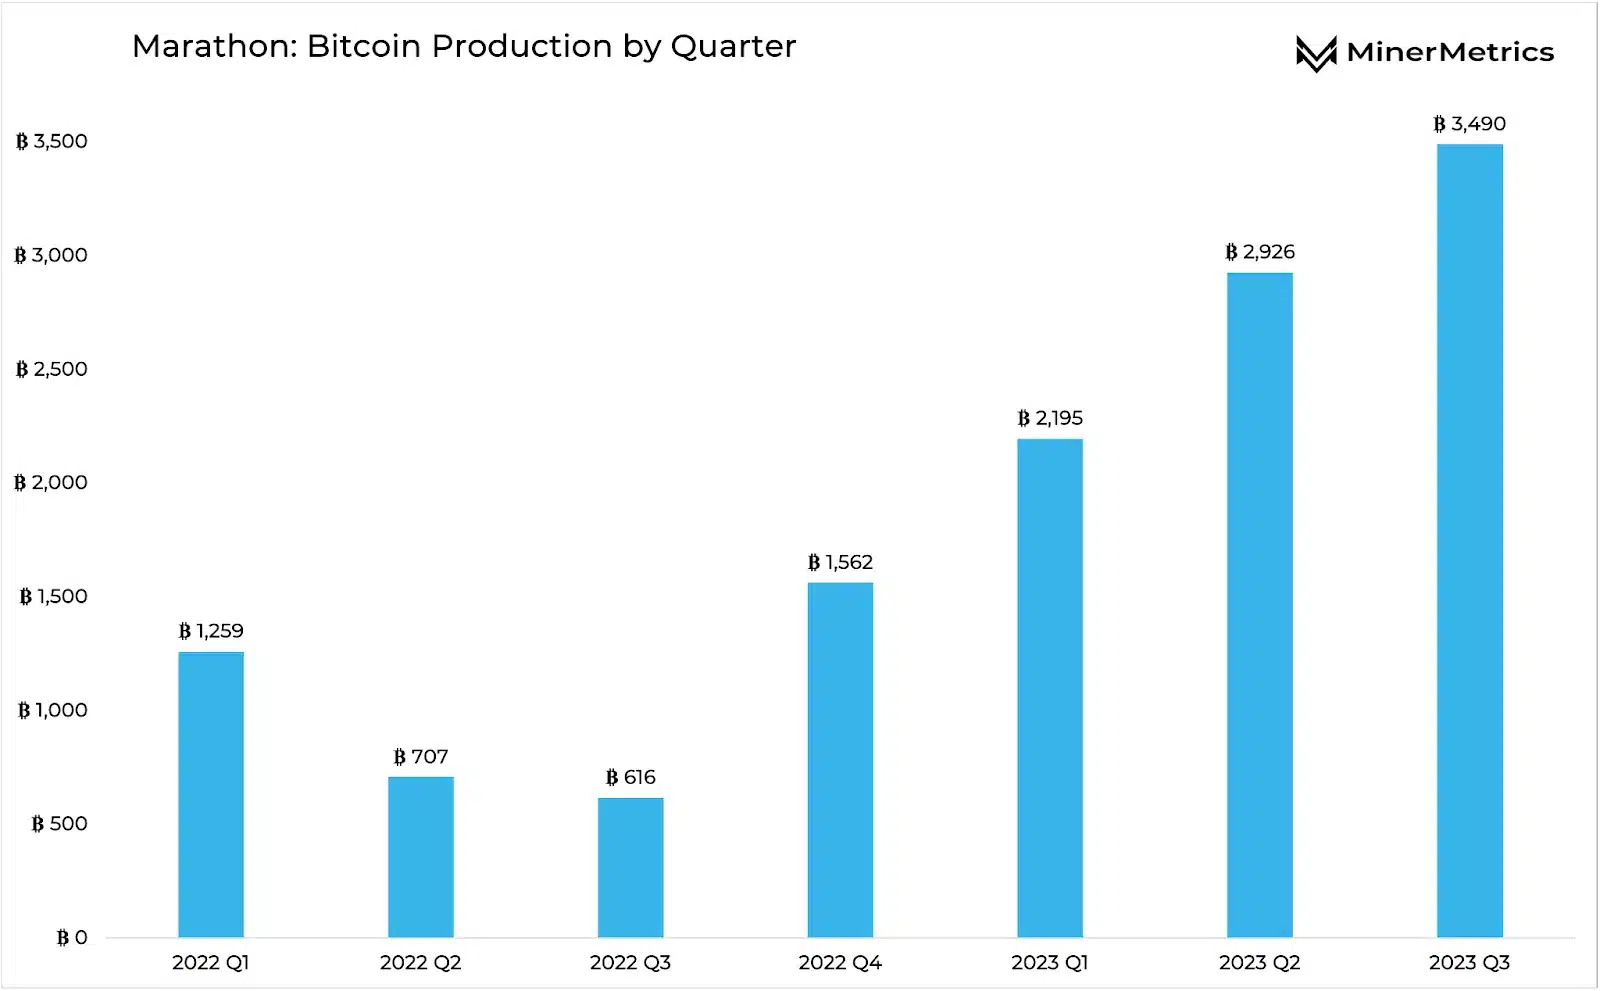 Marathon’s quarterly Bitcoin production overview